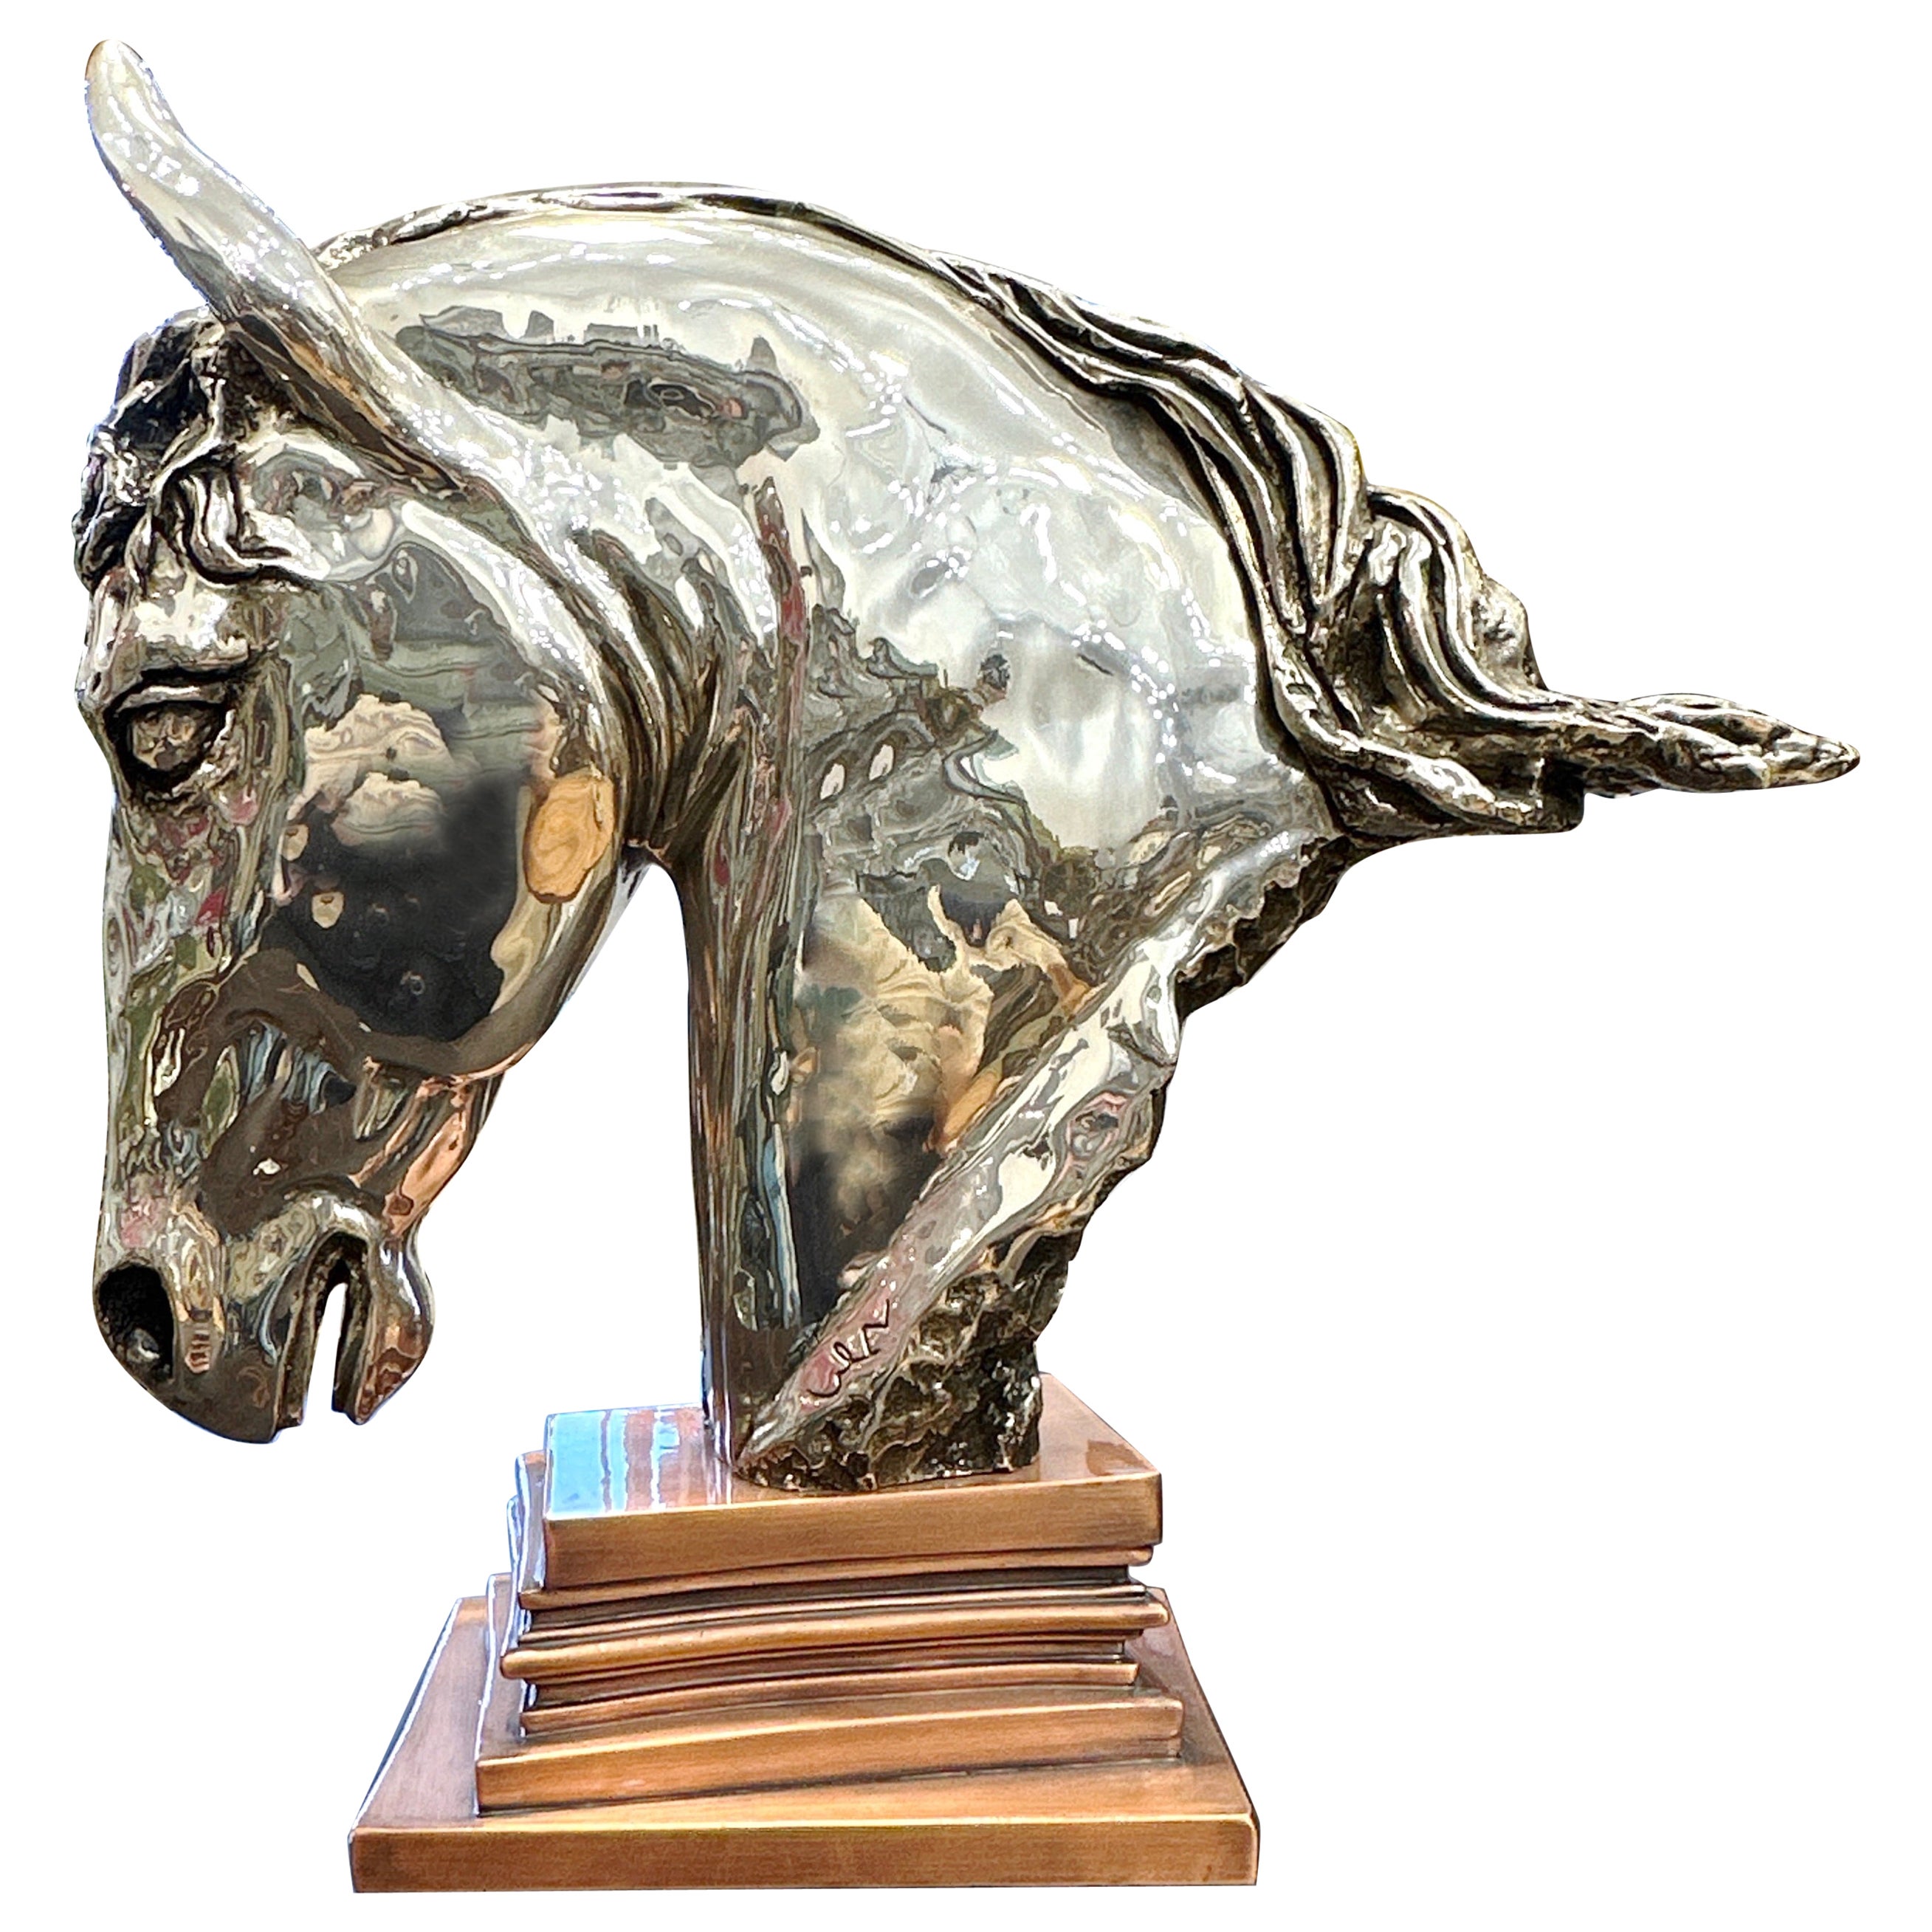 Ricardo Del Rio (1961 -) Mexico City. Large Silver Plated Horse Head Sculpture